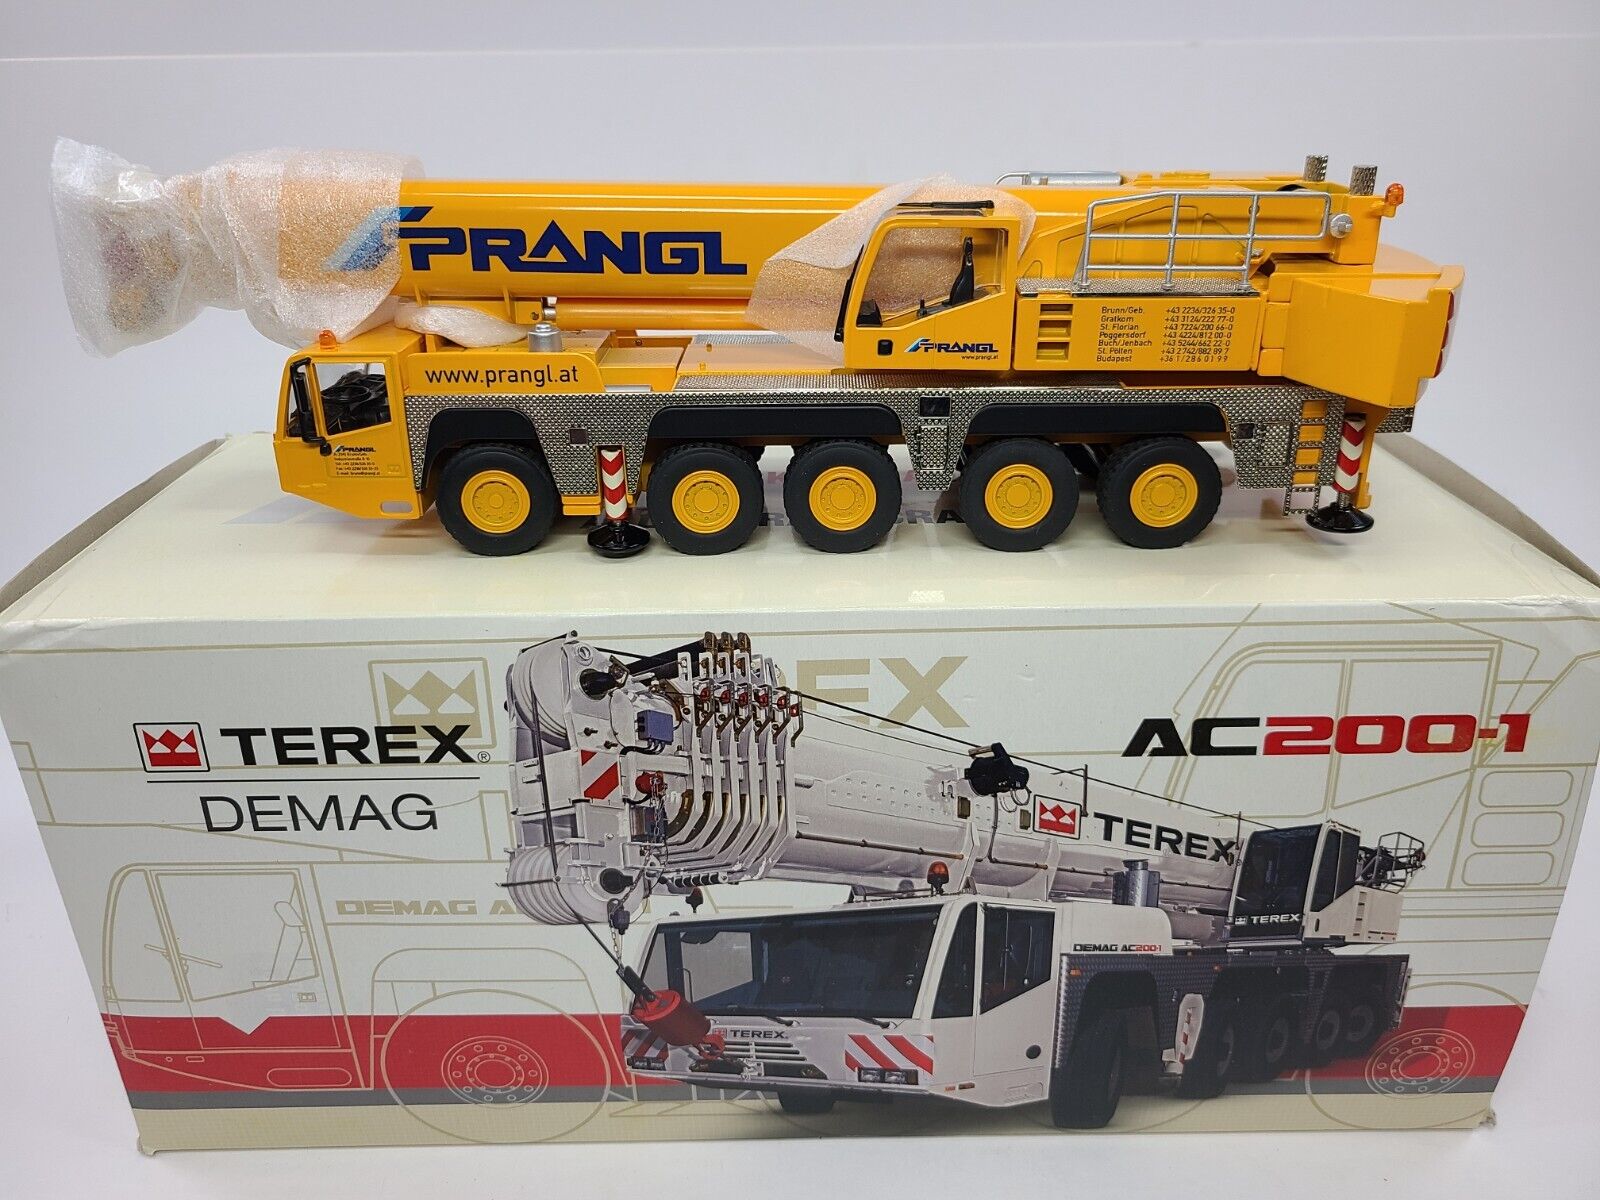 Terex Demag AC200-1 Mobile Crane - Prangl - NZG 1:50 Scale Model #730/03 New